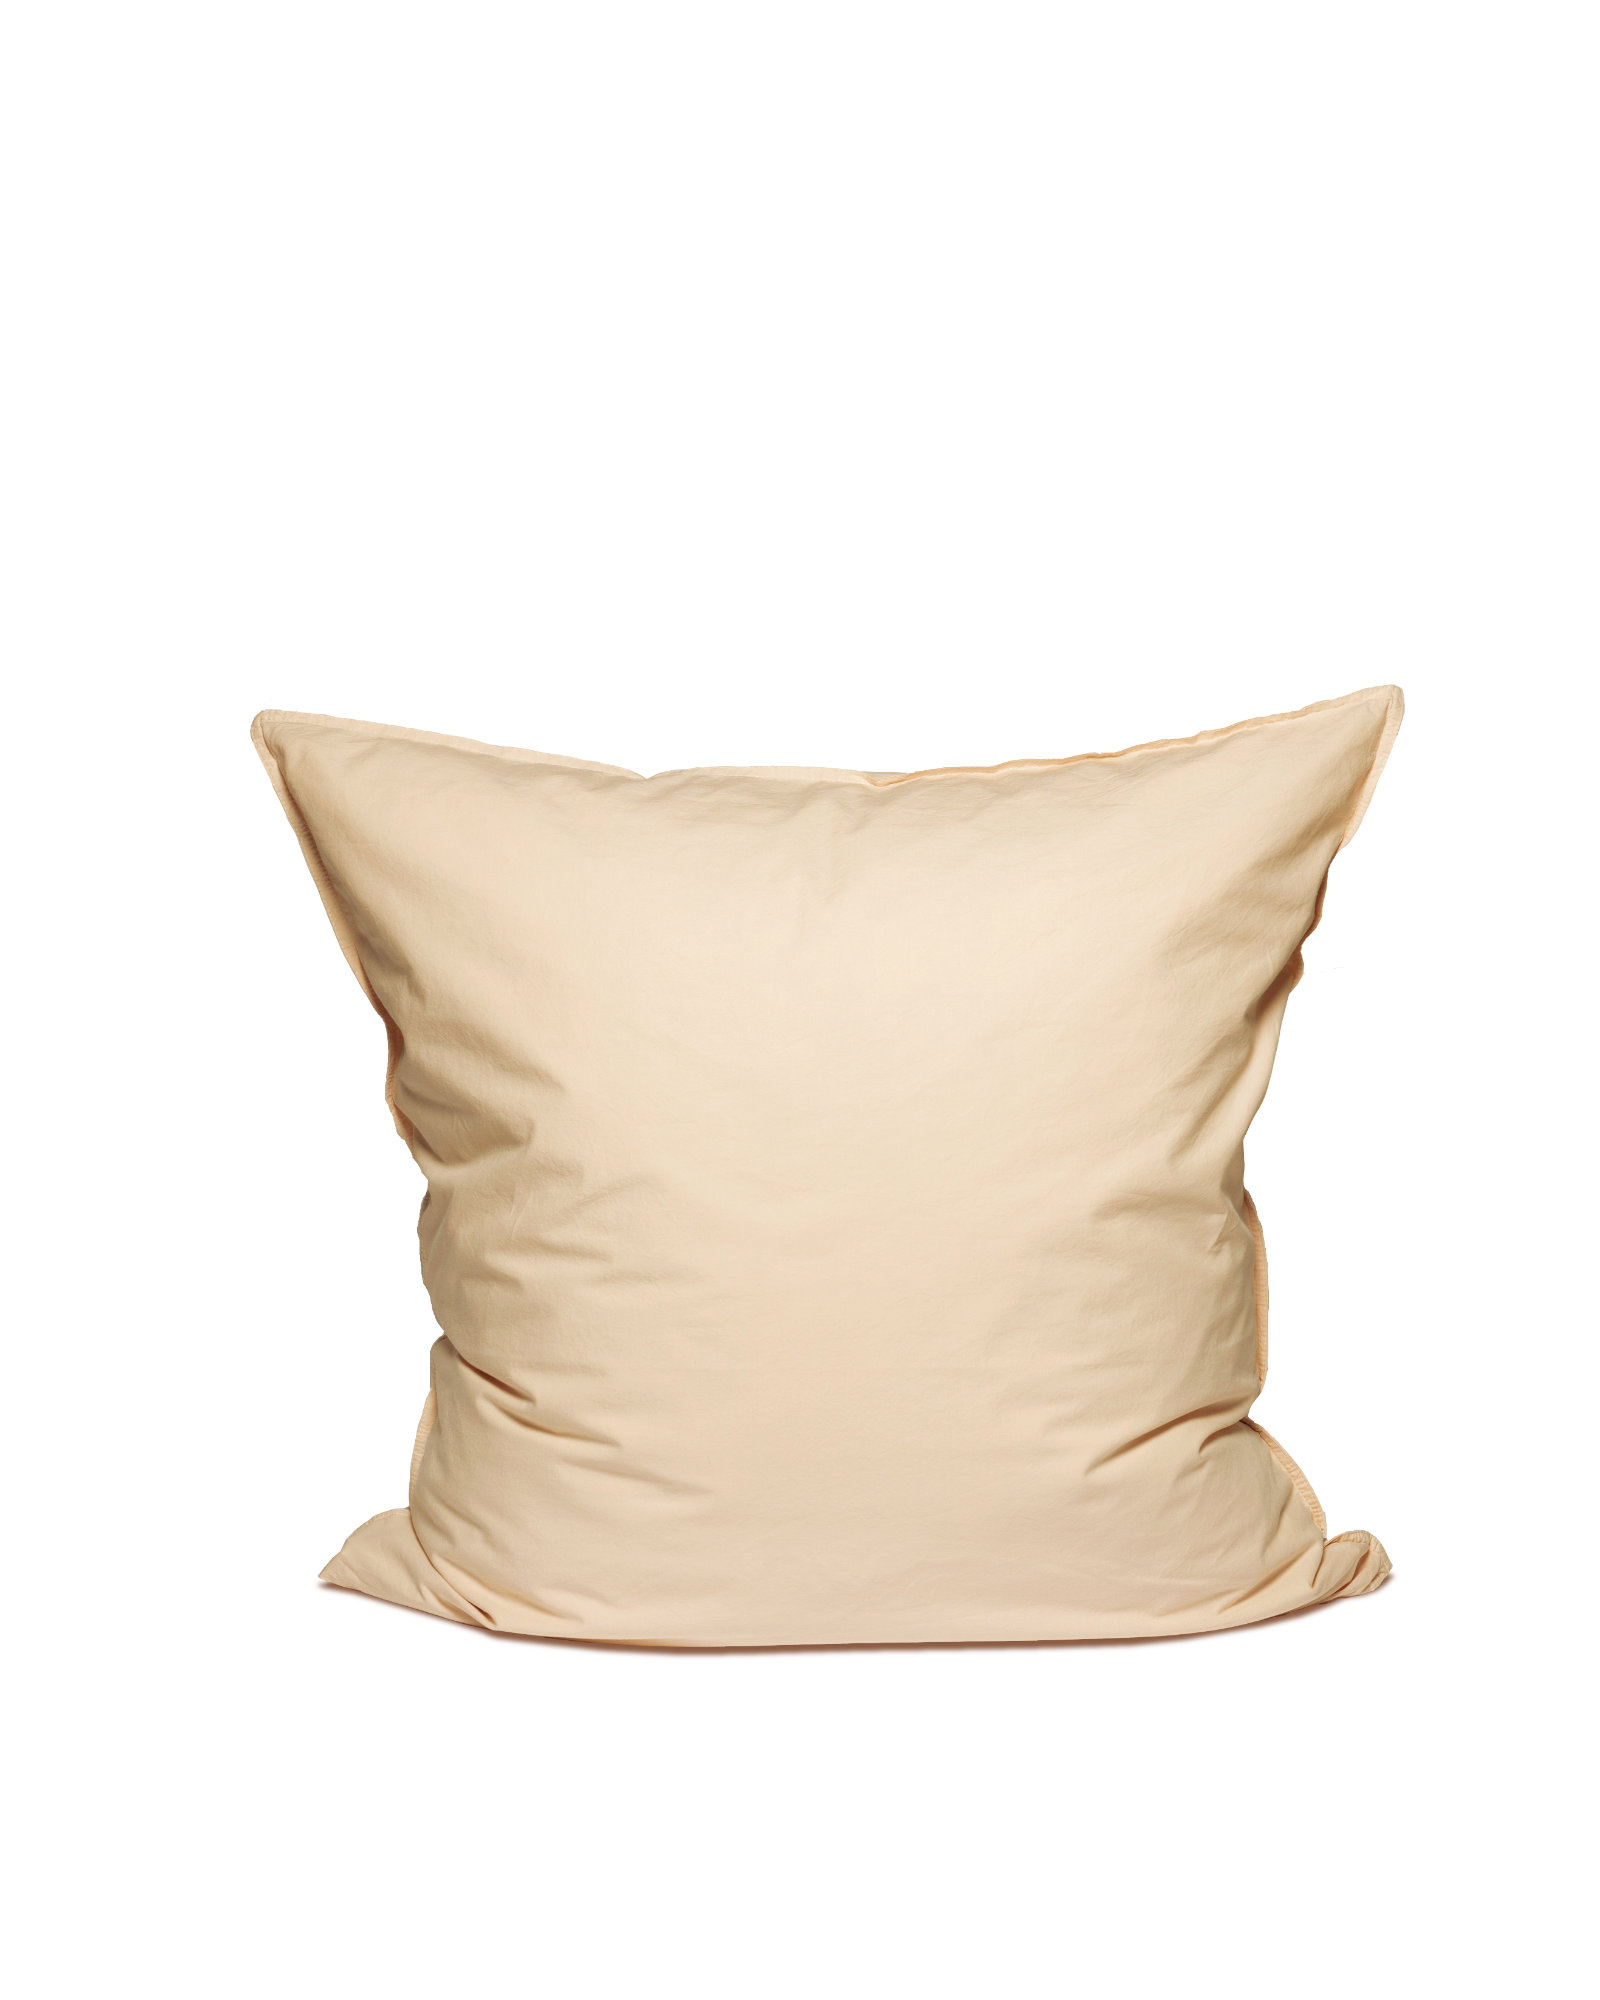 MARIE-MARIE - Pillowcase VINTAGE COTTON Apricot Gelato - 65x65 cm - Apricot Gelato